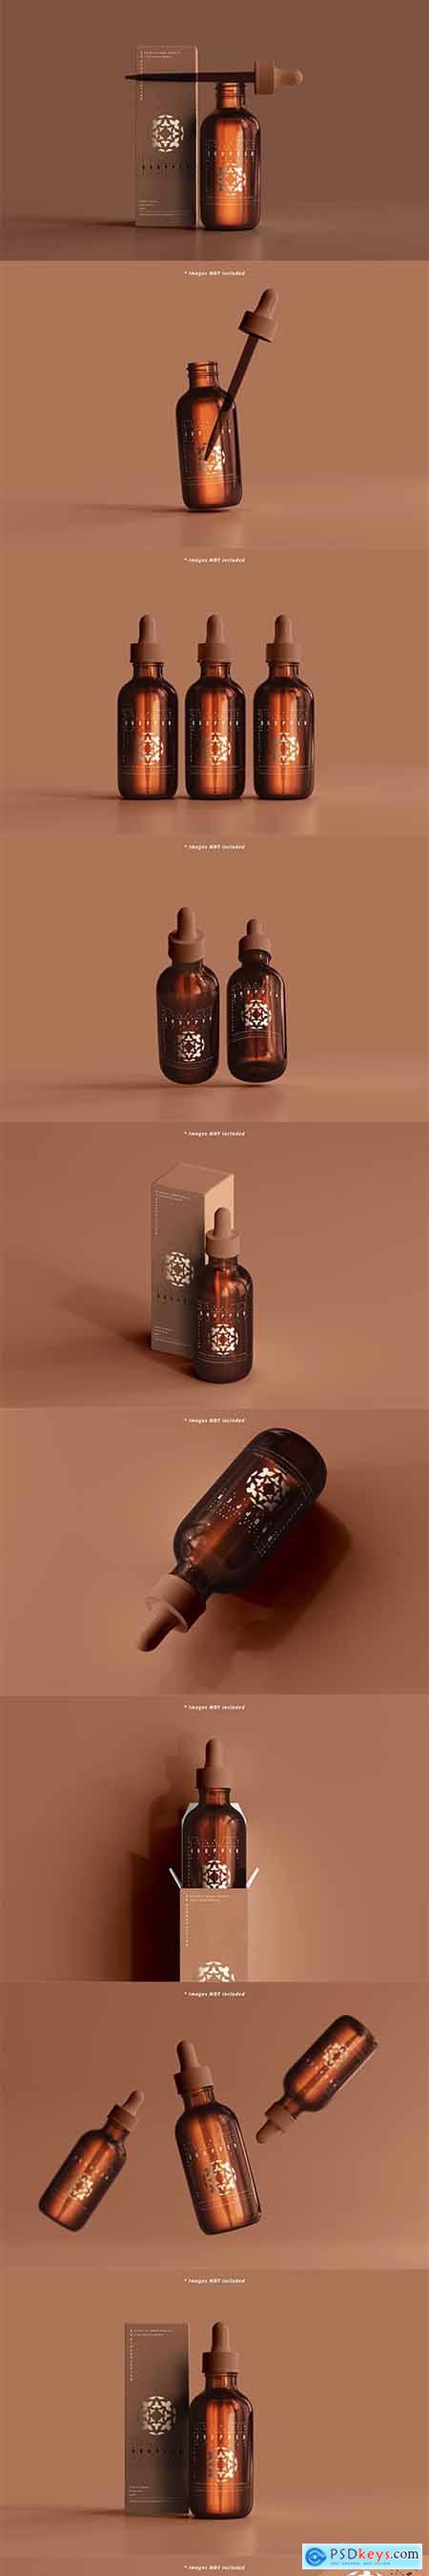 Amber glass dropper bottle and box mockup